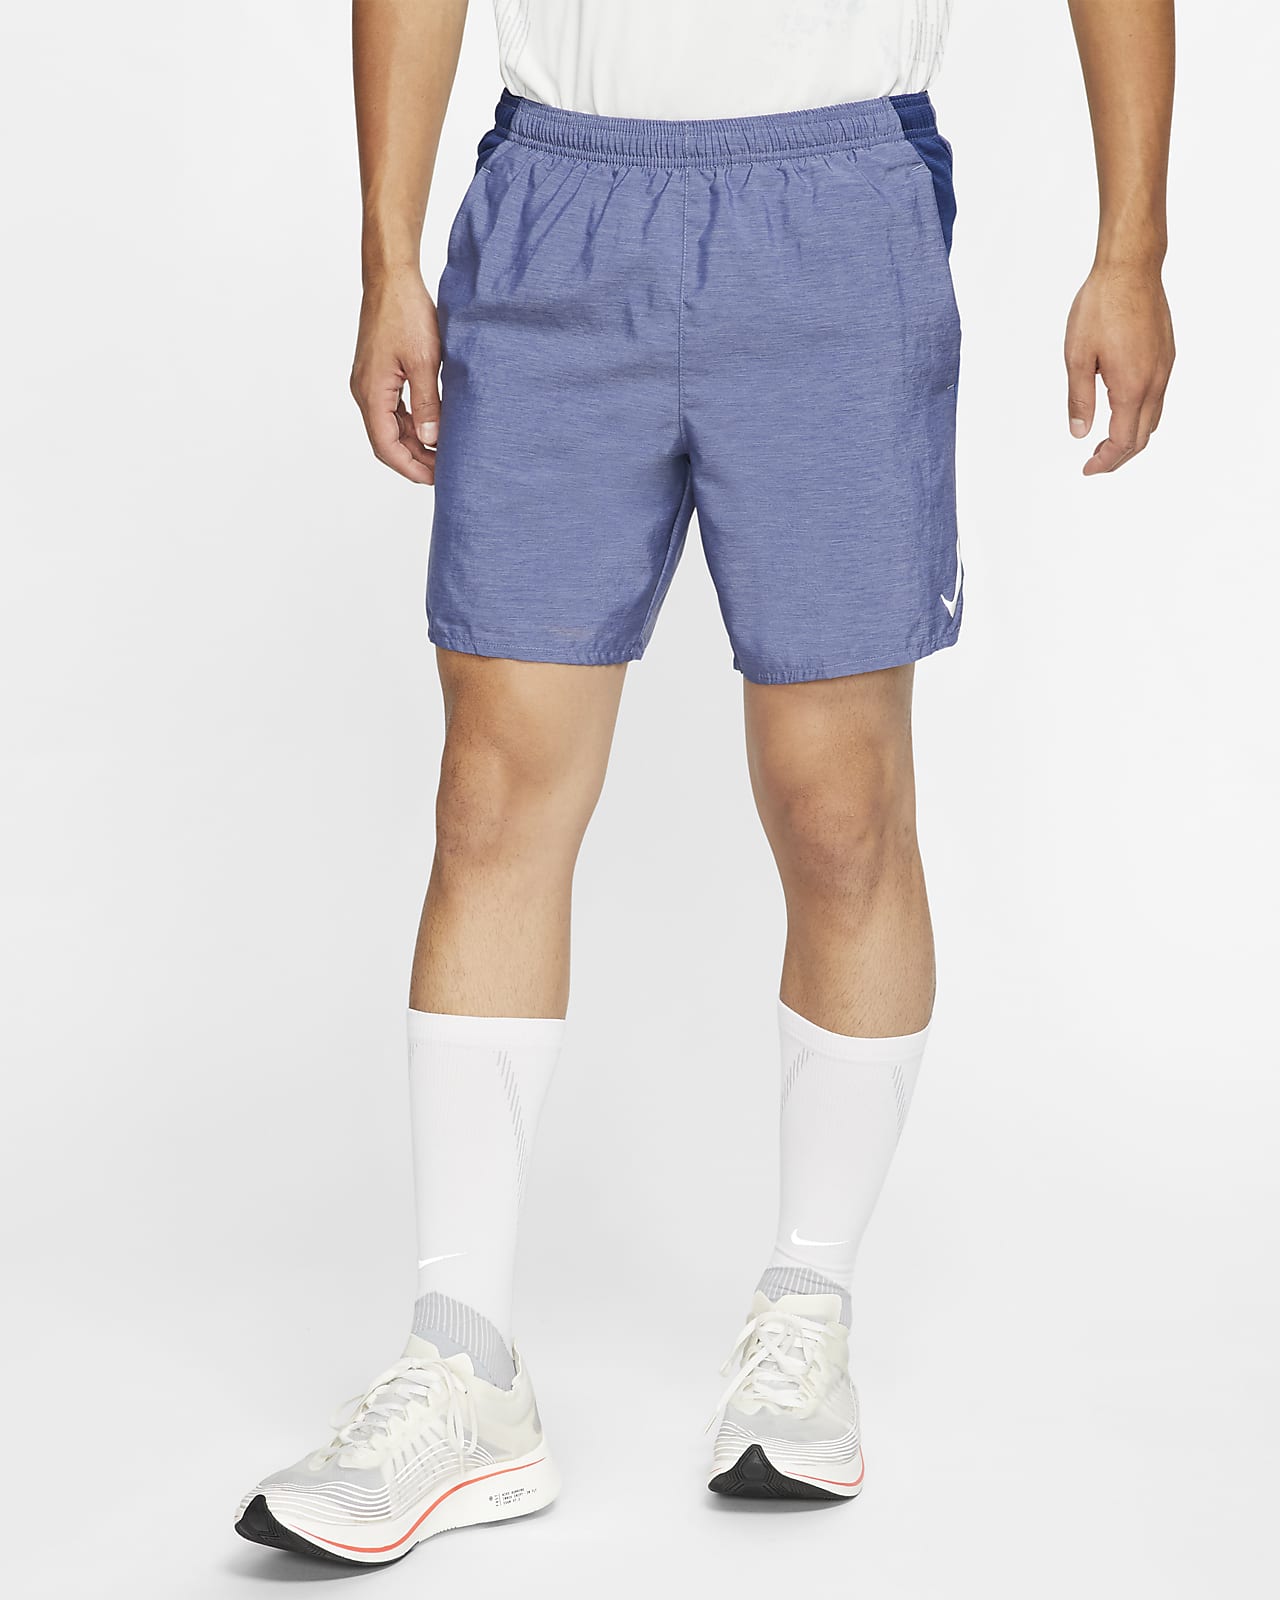 nike men's challenger 7 inch shorts